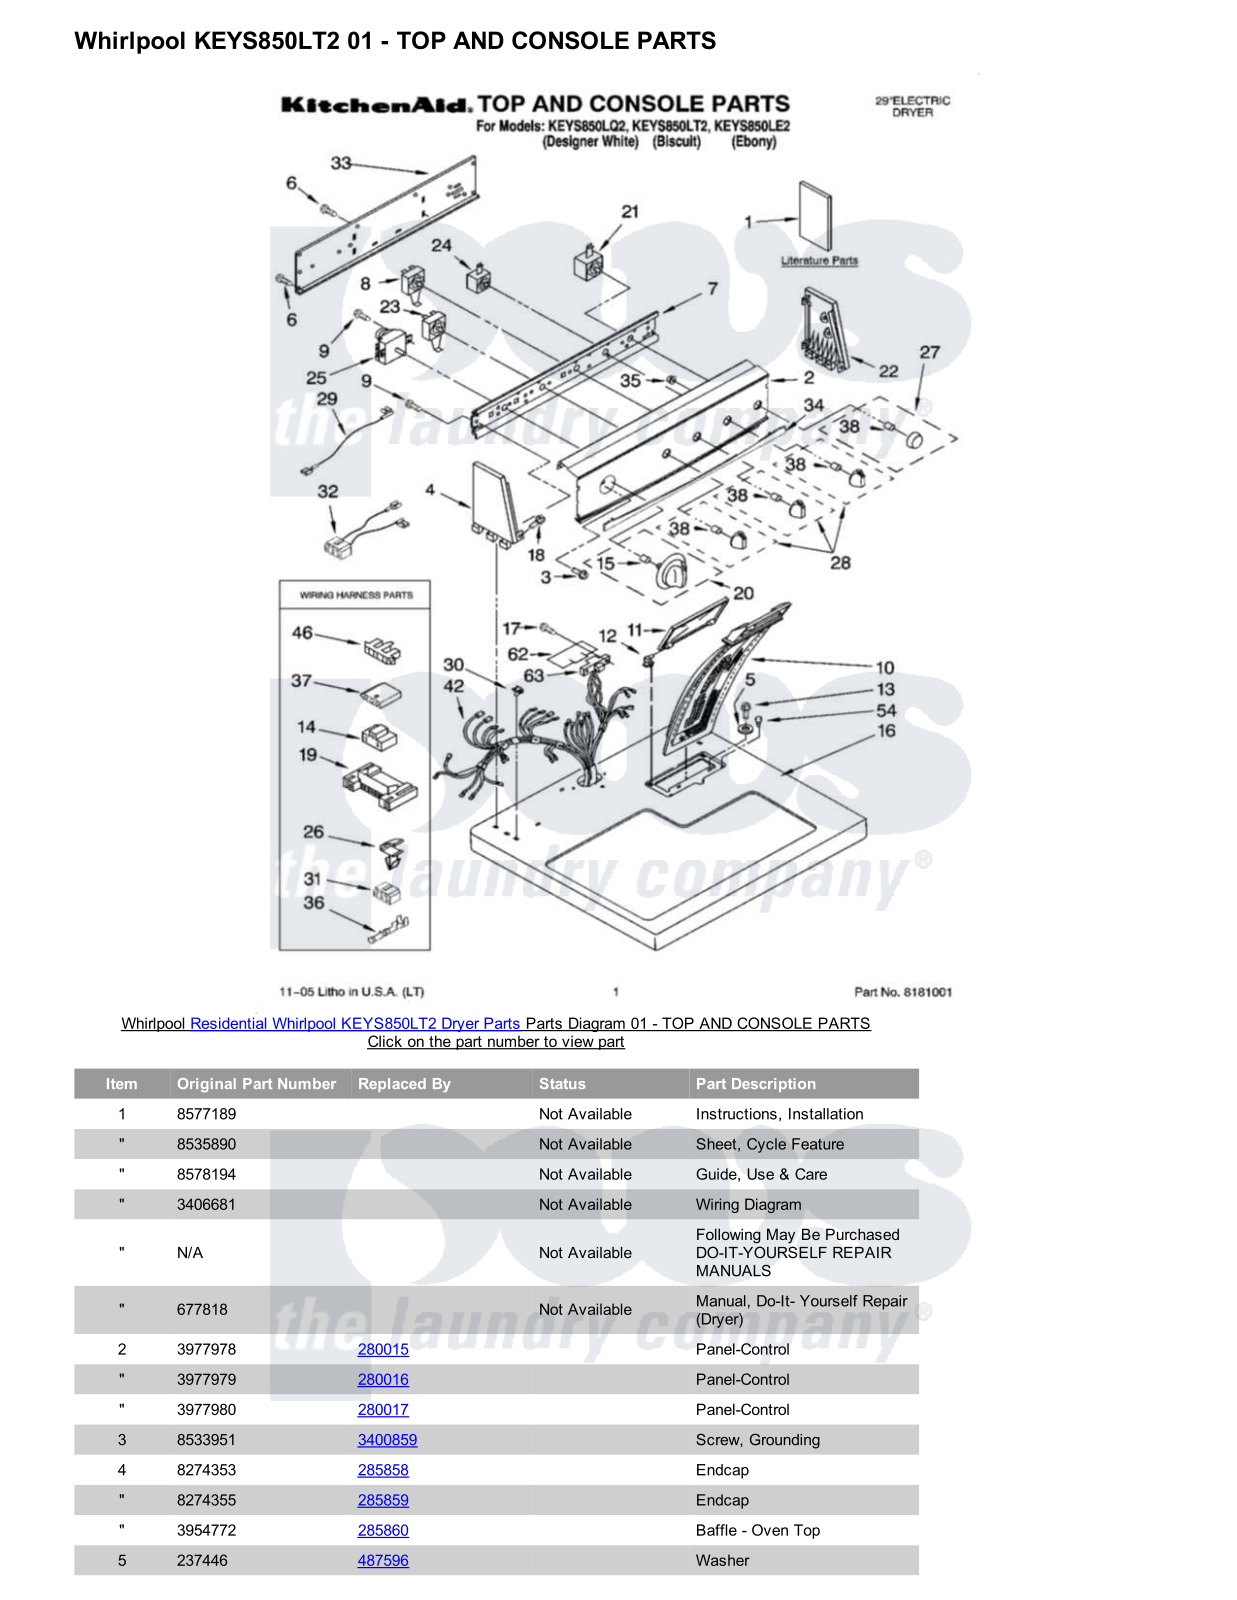 Whirlpool KEYS850LT2 Parts Diagram